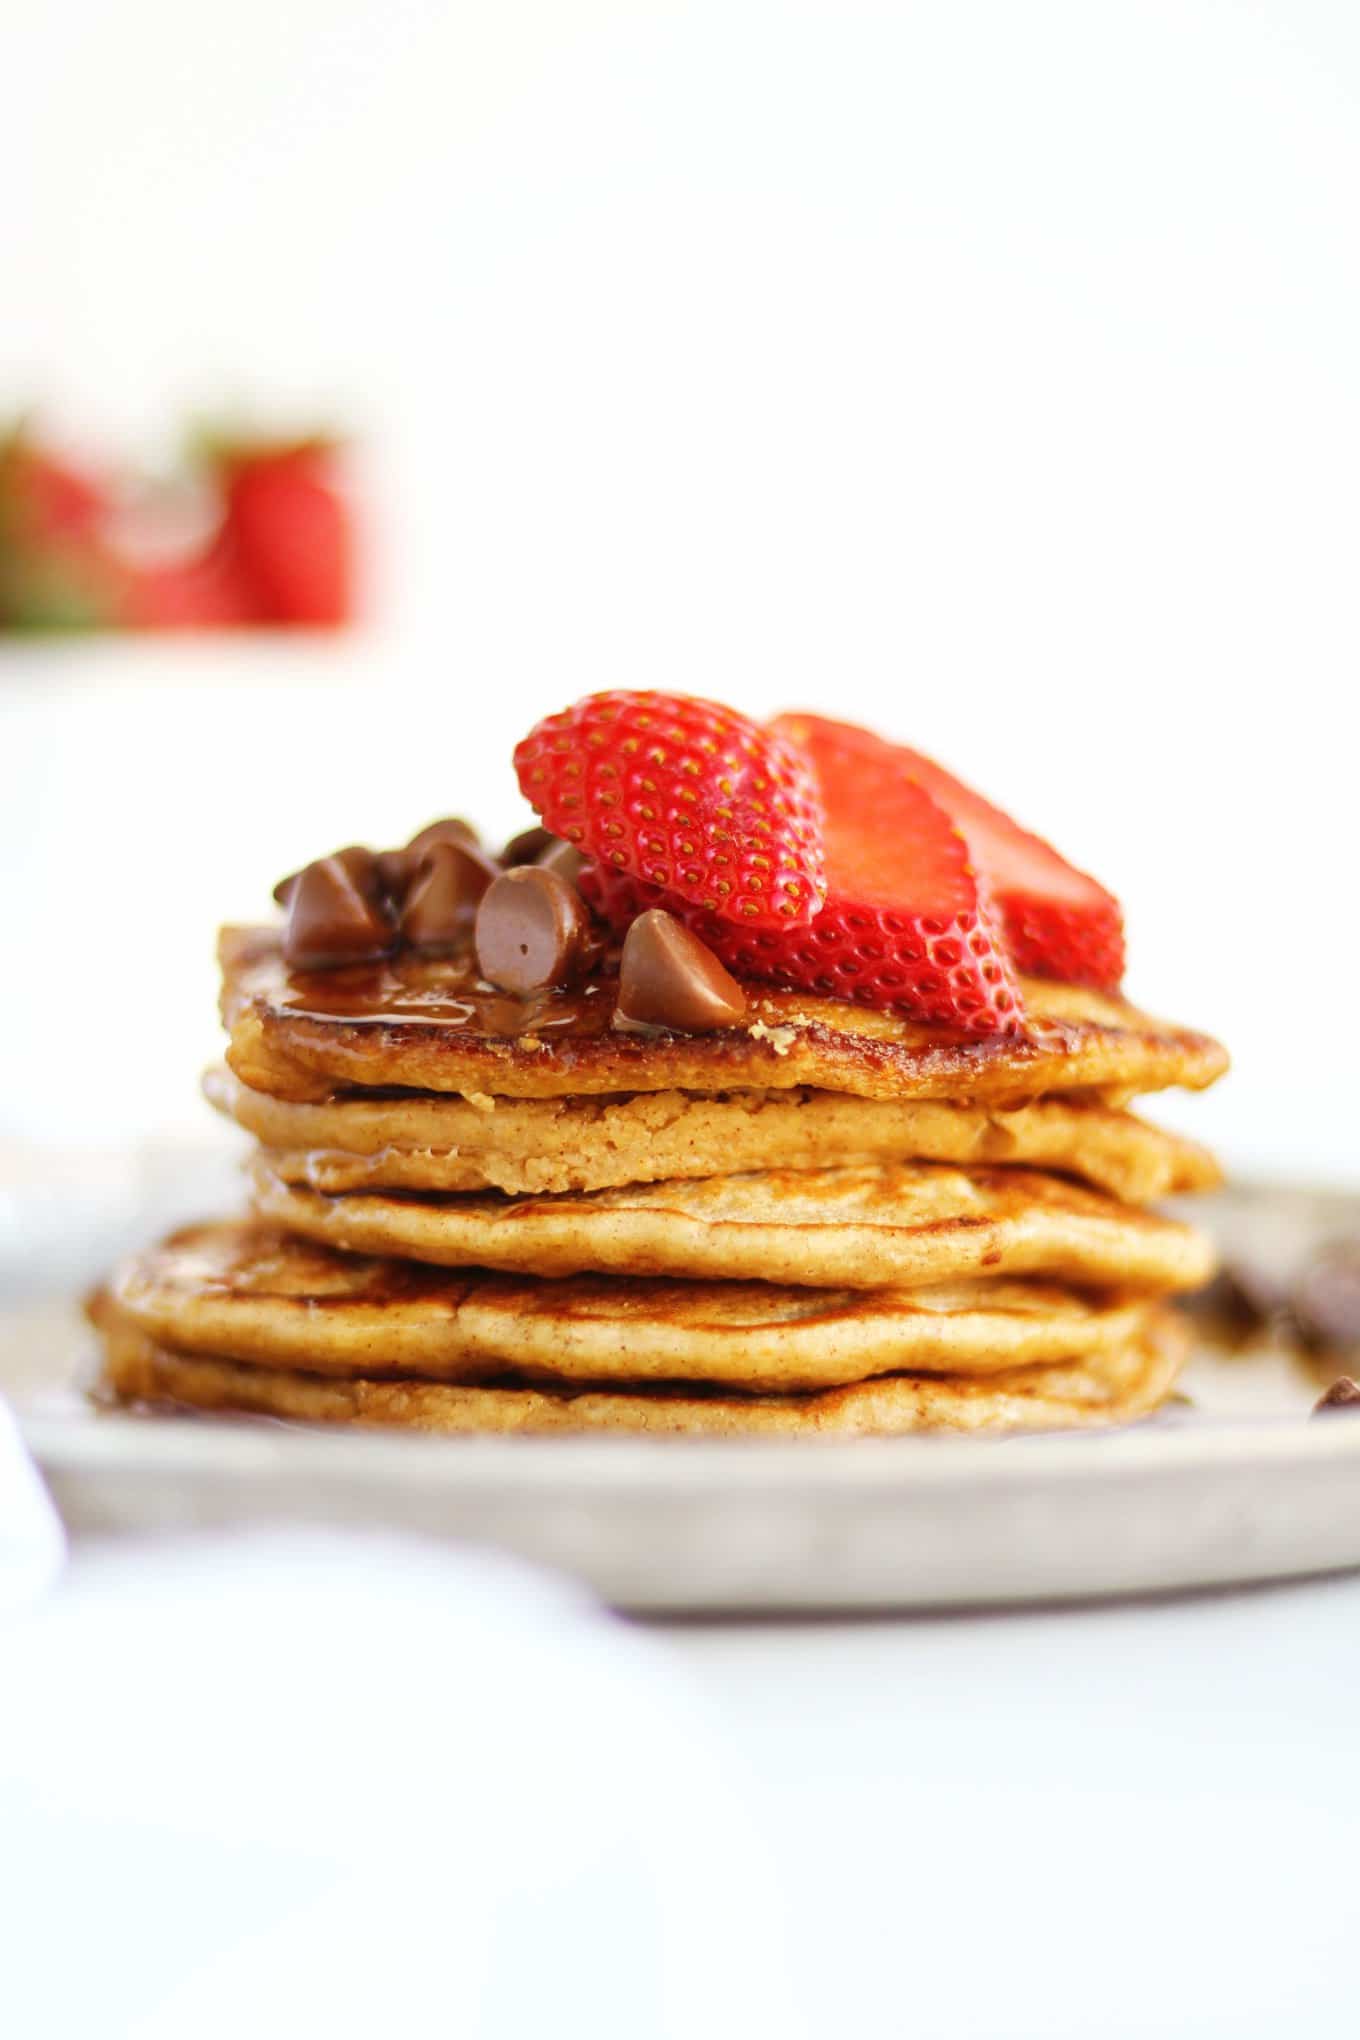 Healthy Yogurt and Oat Flour Pancakes from rhubarbarians.com on foodiecrush.com